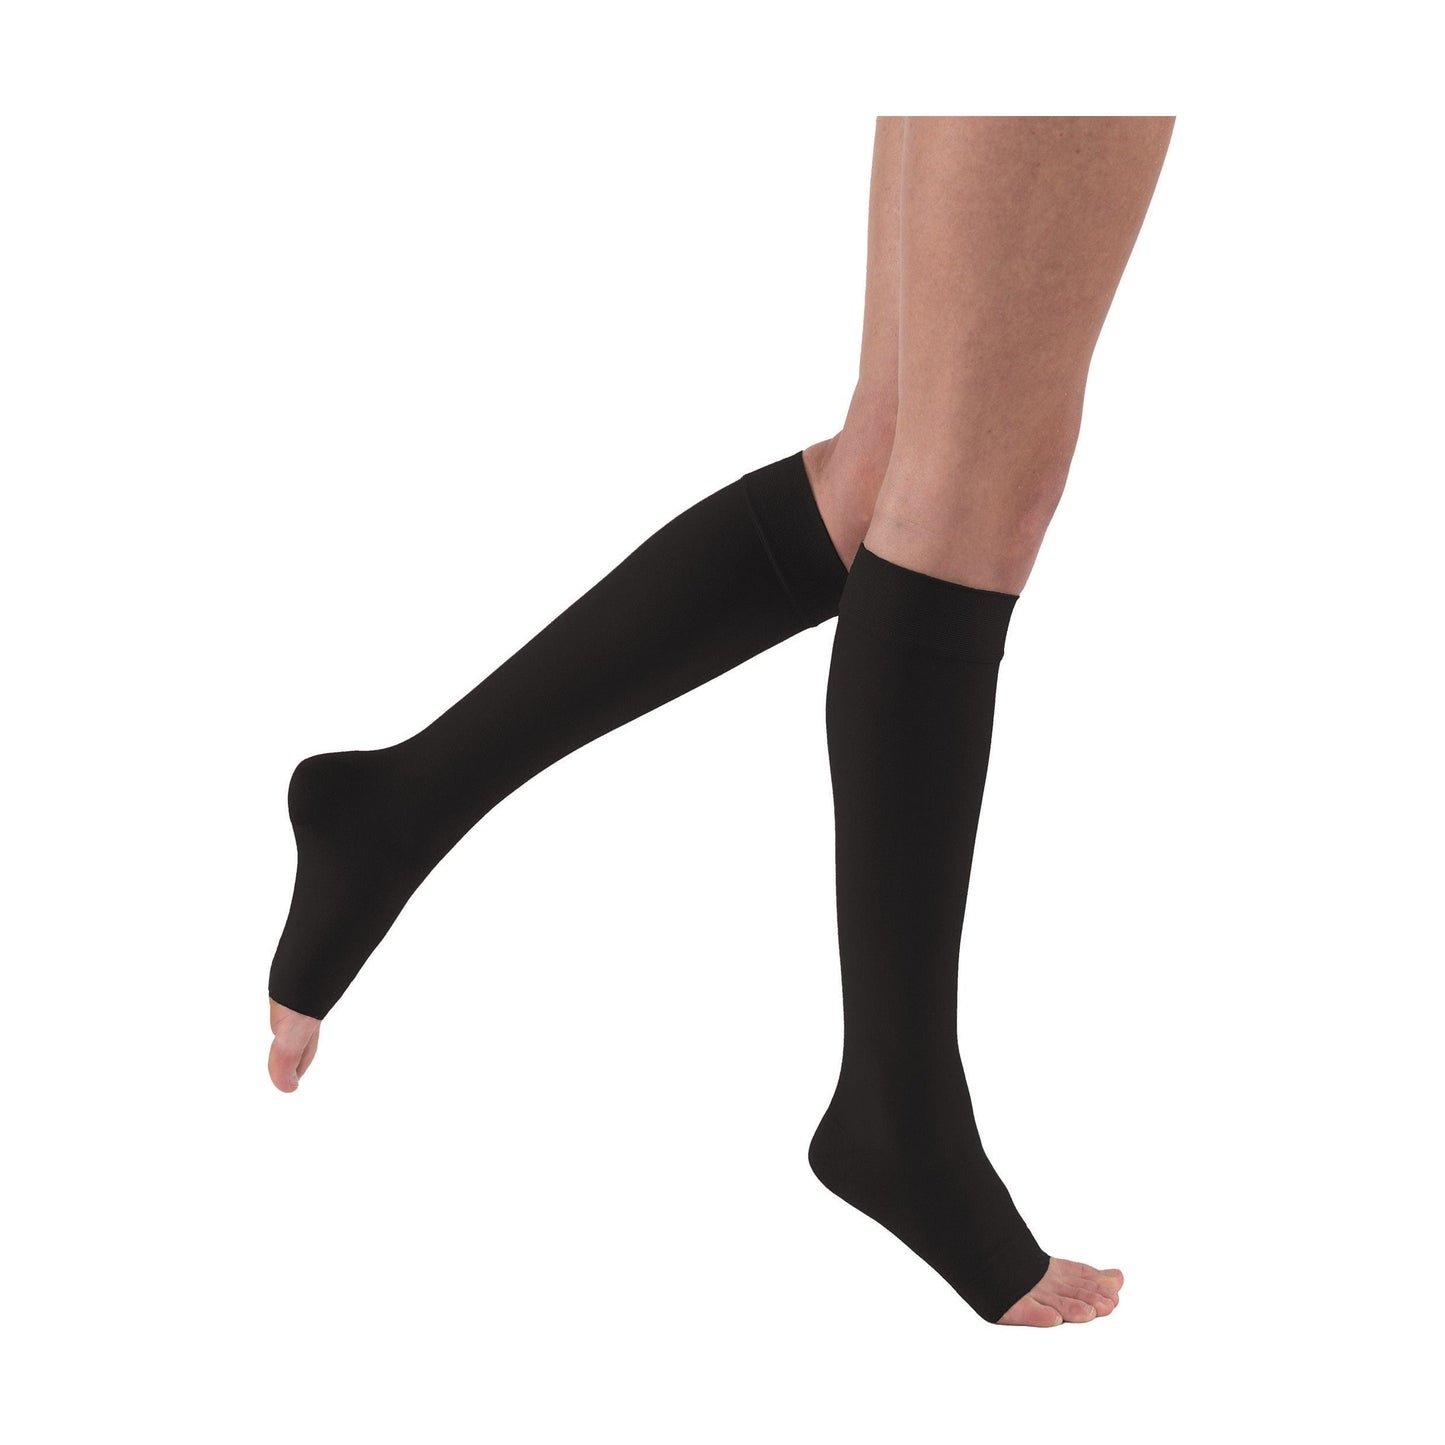 Anti Embolism Compression Stockings, Knee High Unisex Ted Hose Socks 15-20  mmHg Moderate Level X-Large (1 Pair)